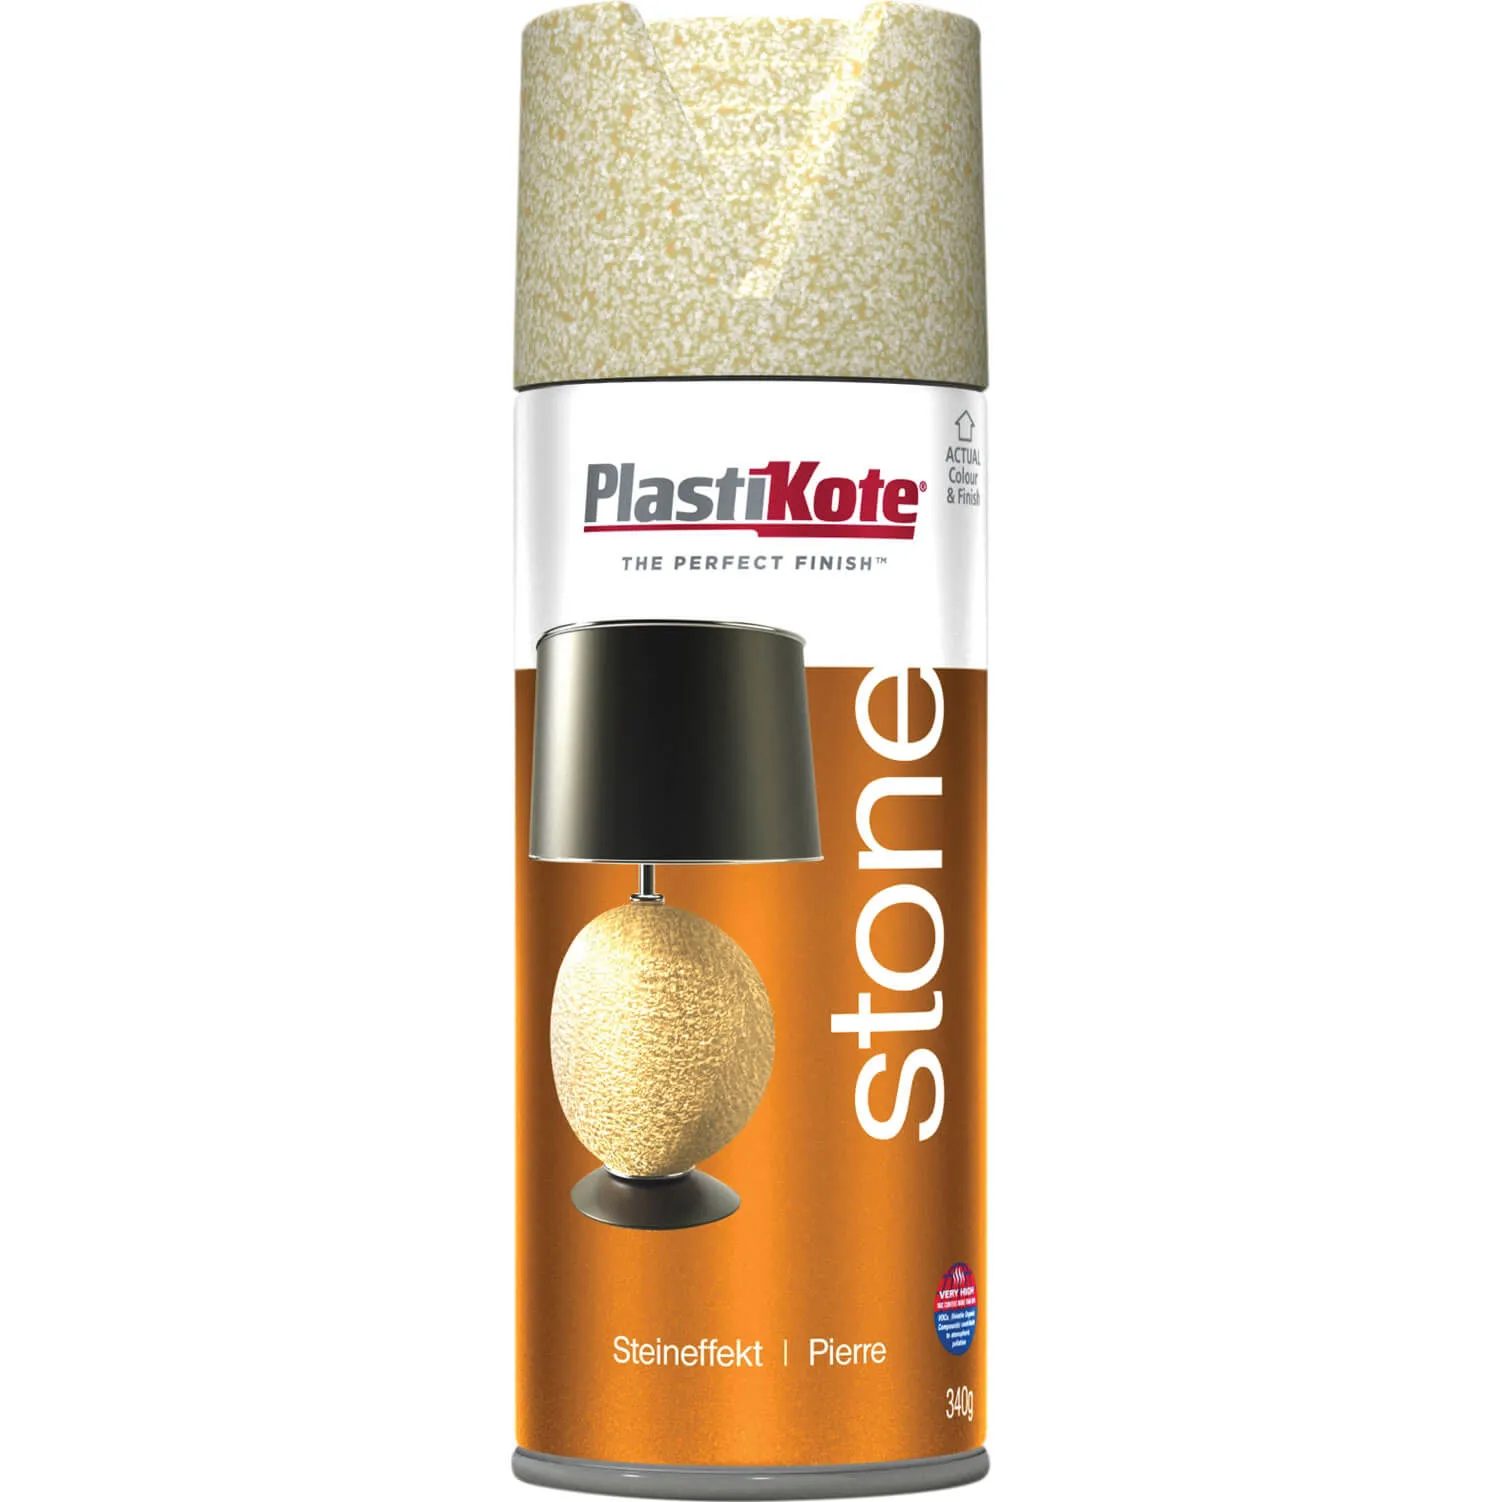 Plastikote Fleckstone Spray Paint - Santa Fe Sand, 400ml